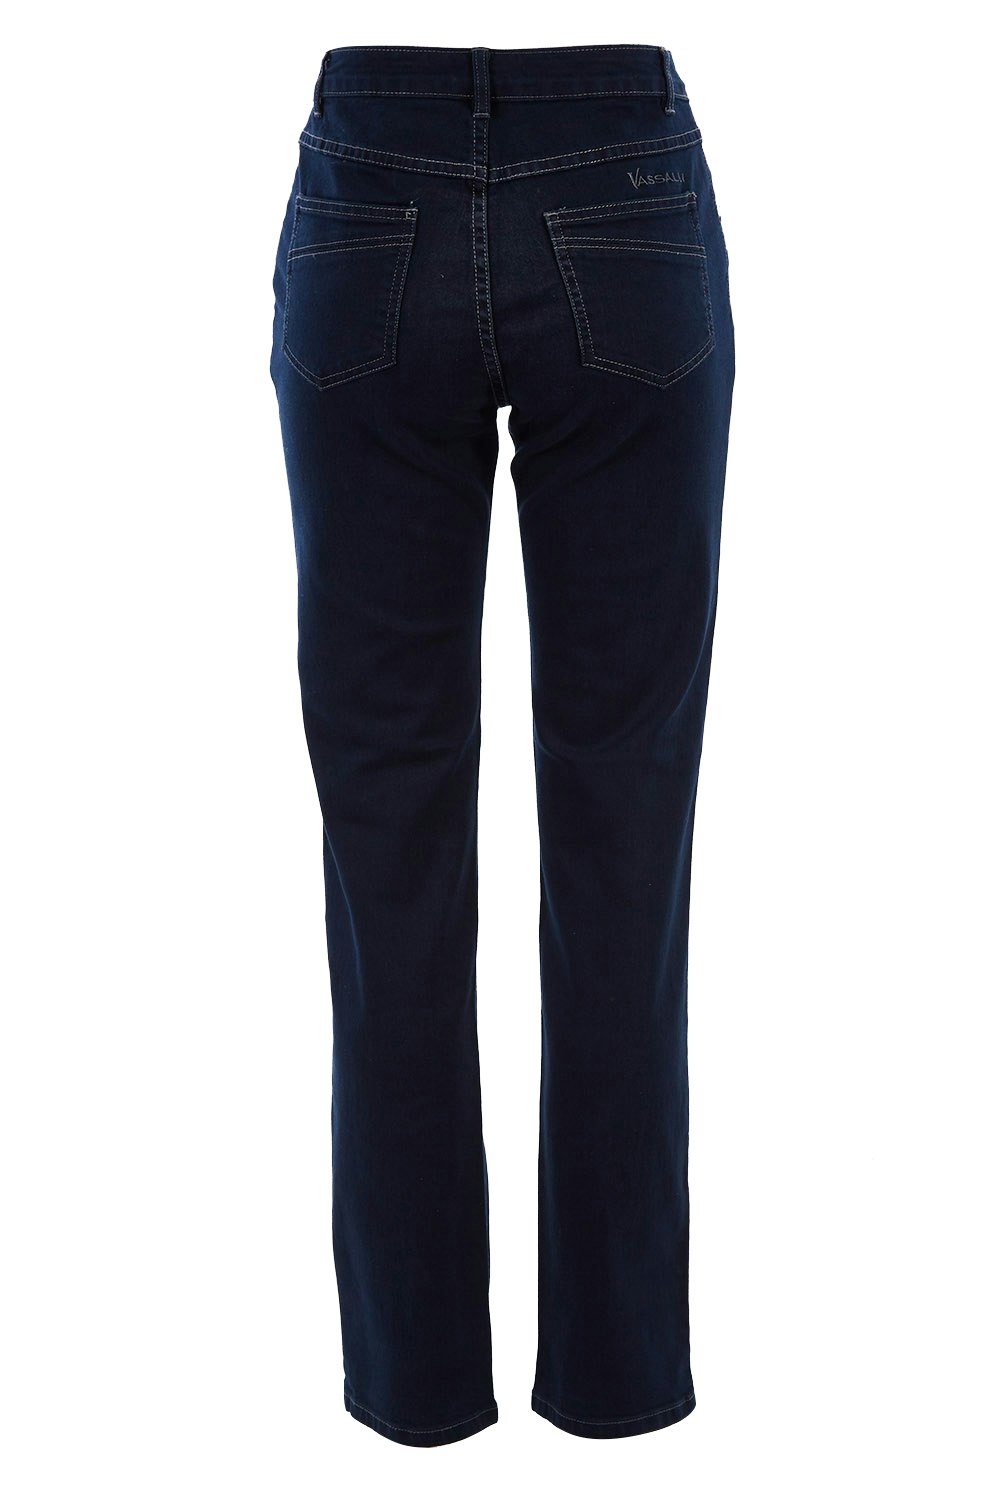 Vassalli Slim Leg Jean - Womens Straight Jeans at Birdsnest Online